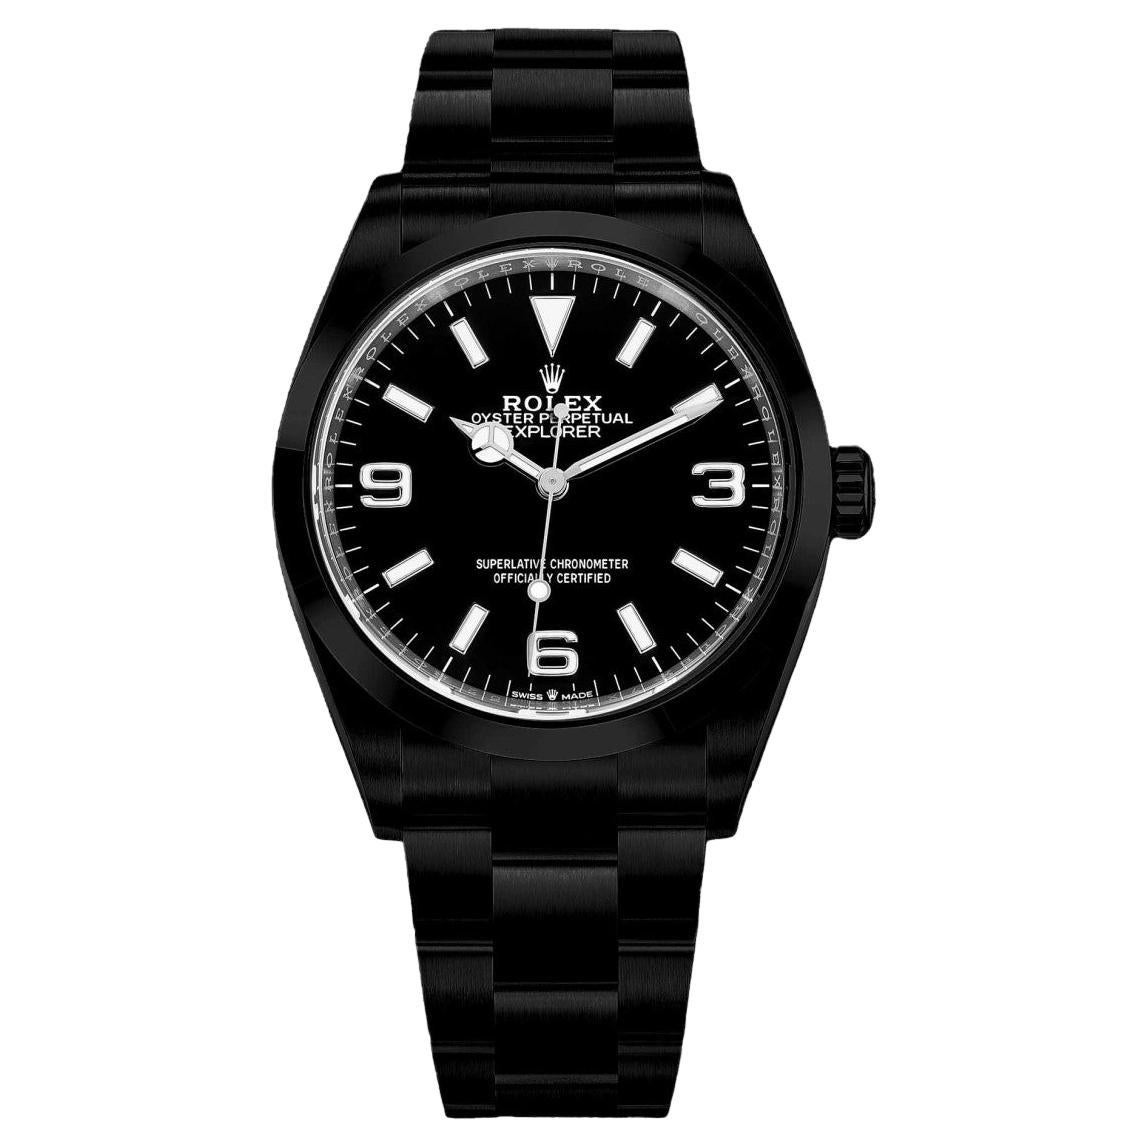 Reloj Rolex Explorer 214270 Acero inoxidable con revestimiento PVD/DLC negro